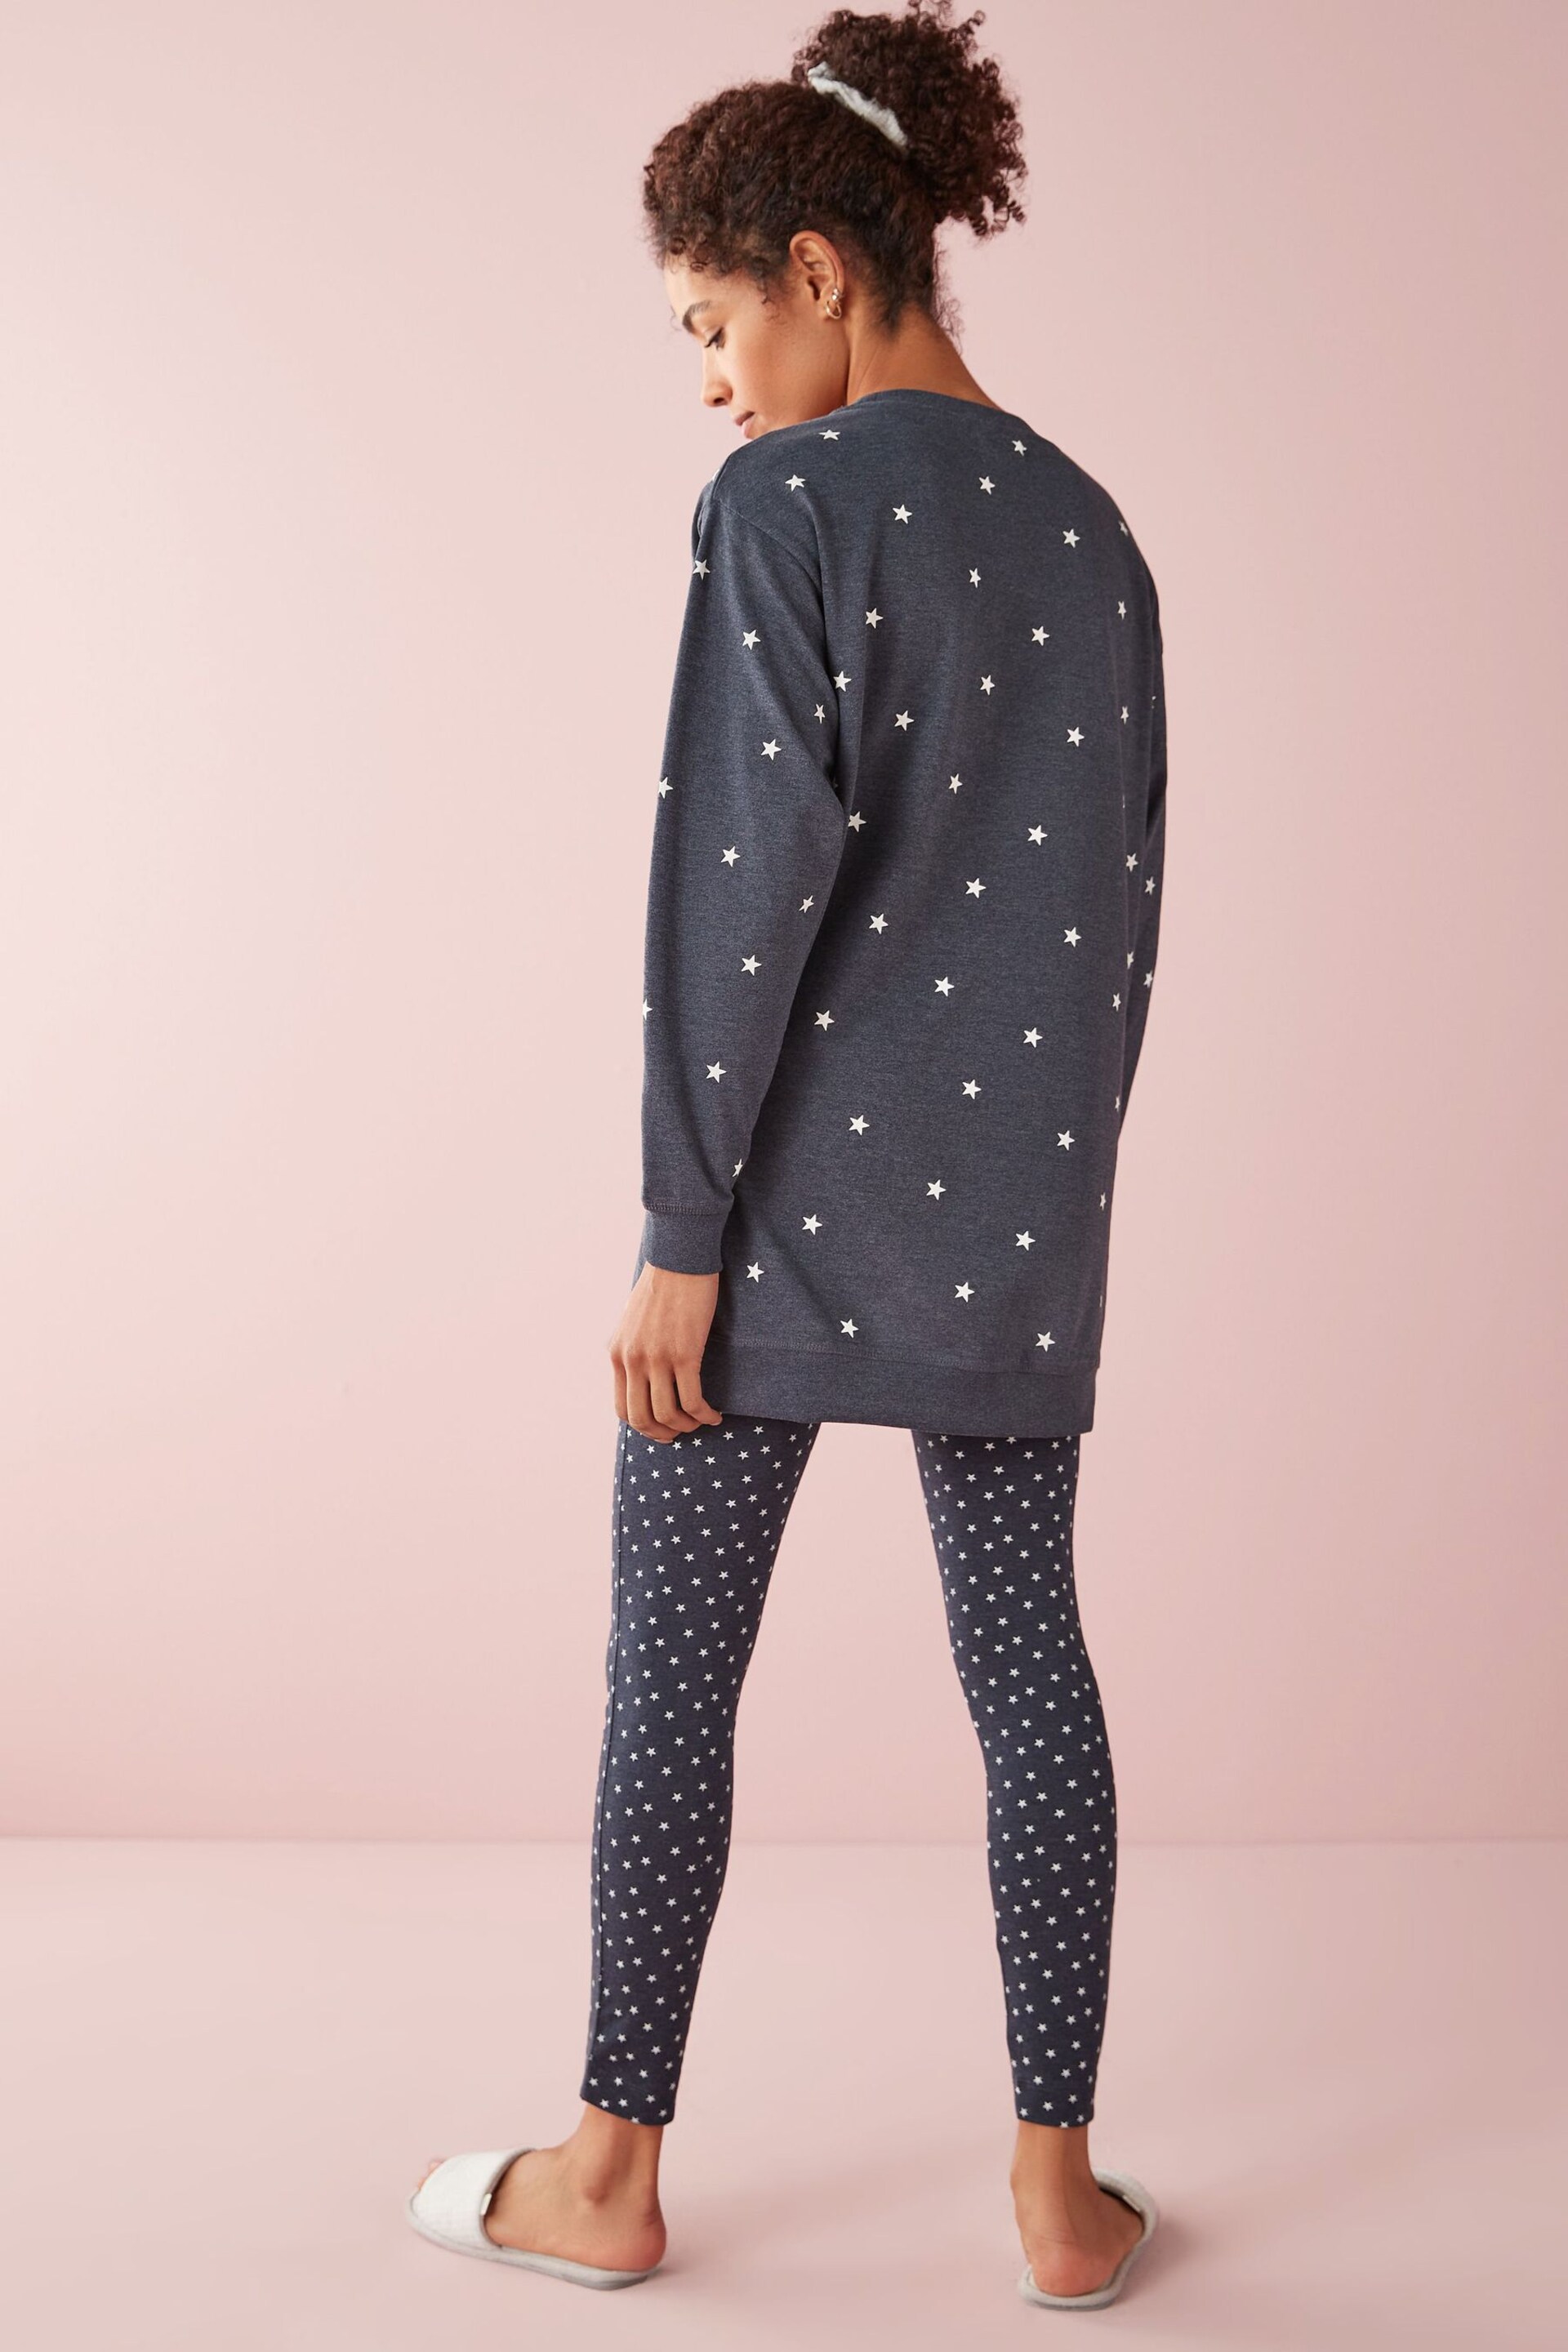 Navy Blue Stars Cotton Tunic And Legging Pyjamas Set - Image 2 of 7